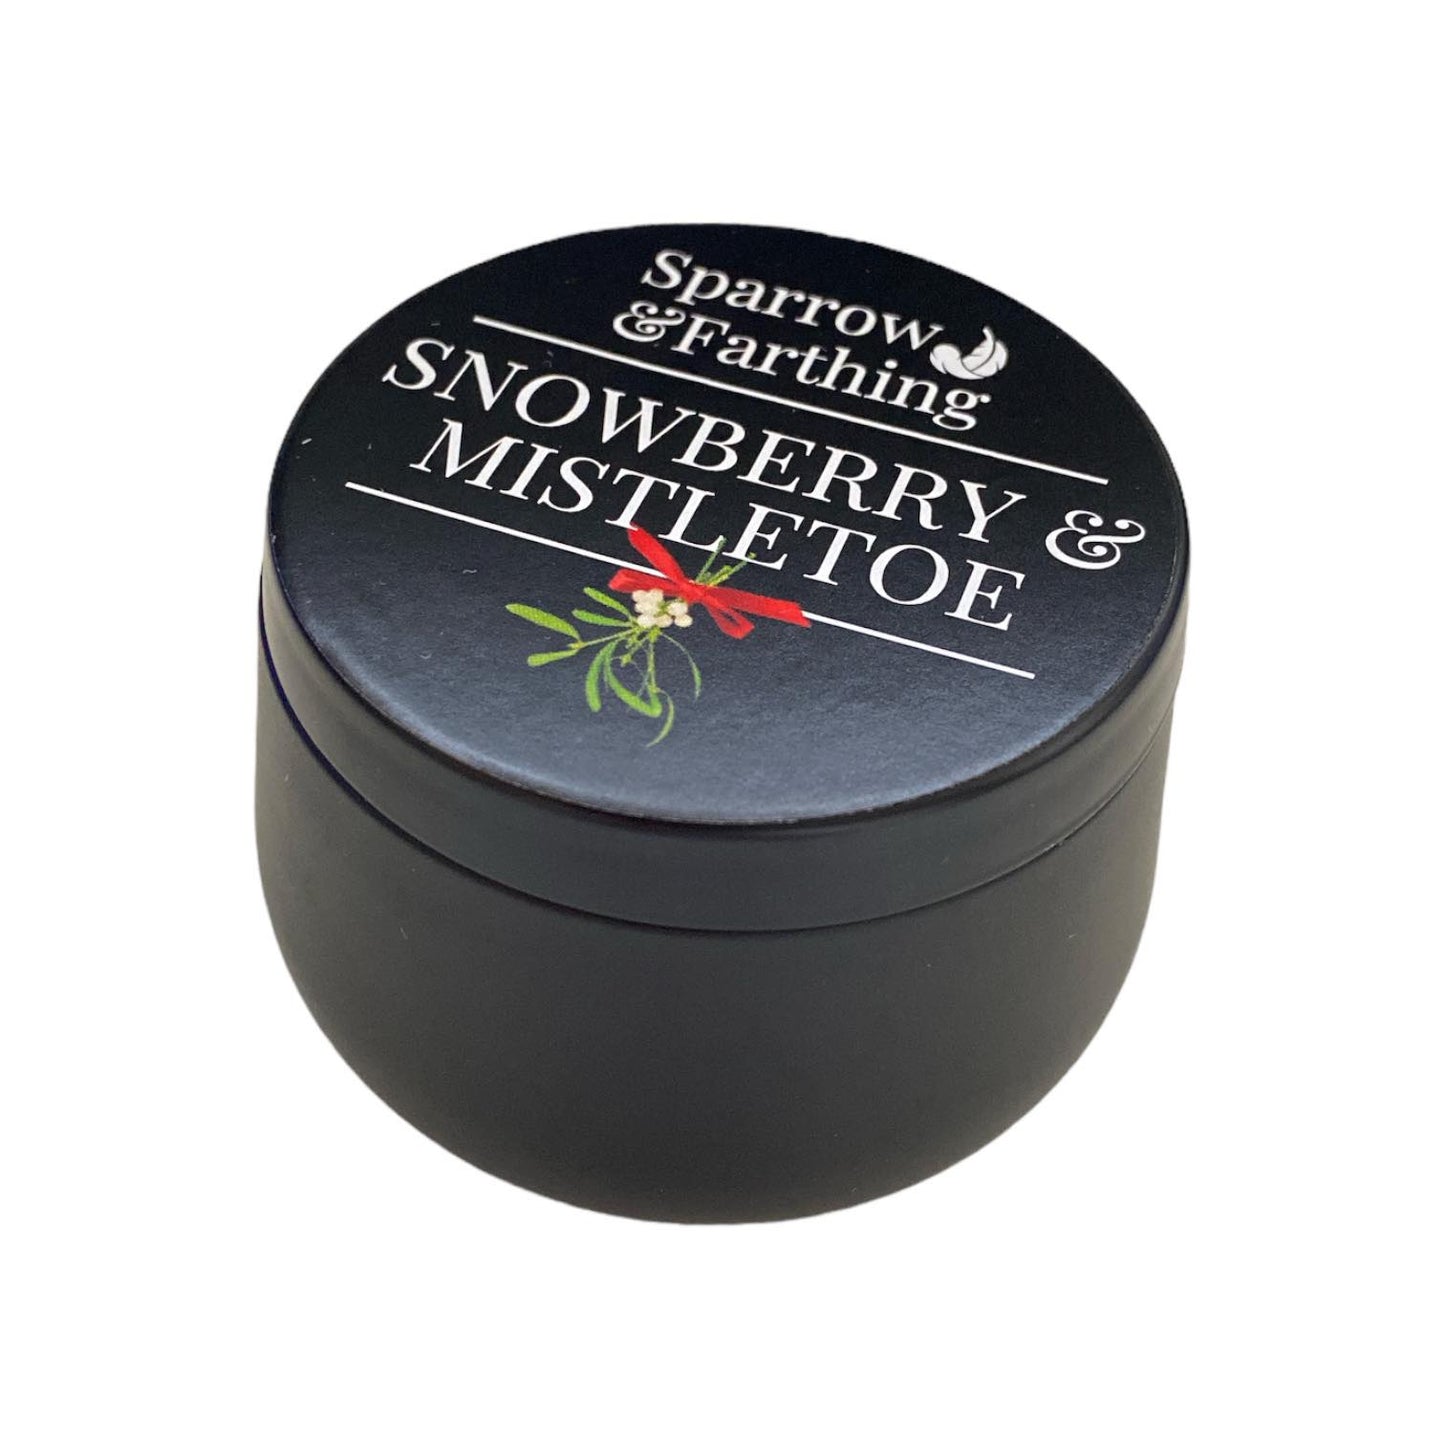 Snowberry & Mistletoe Candle